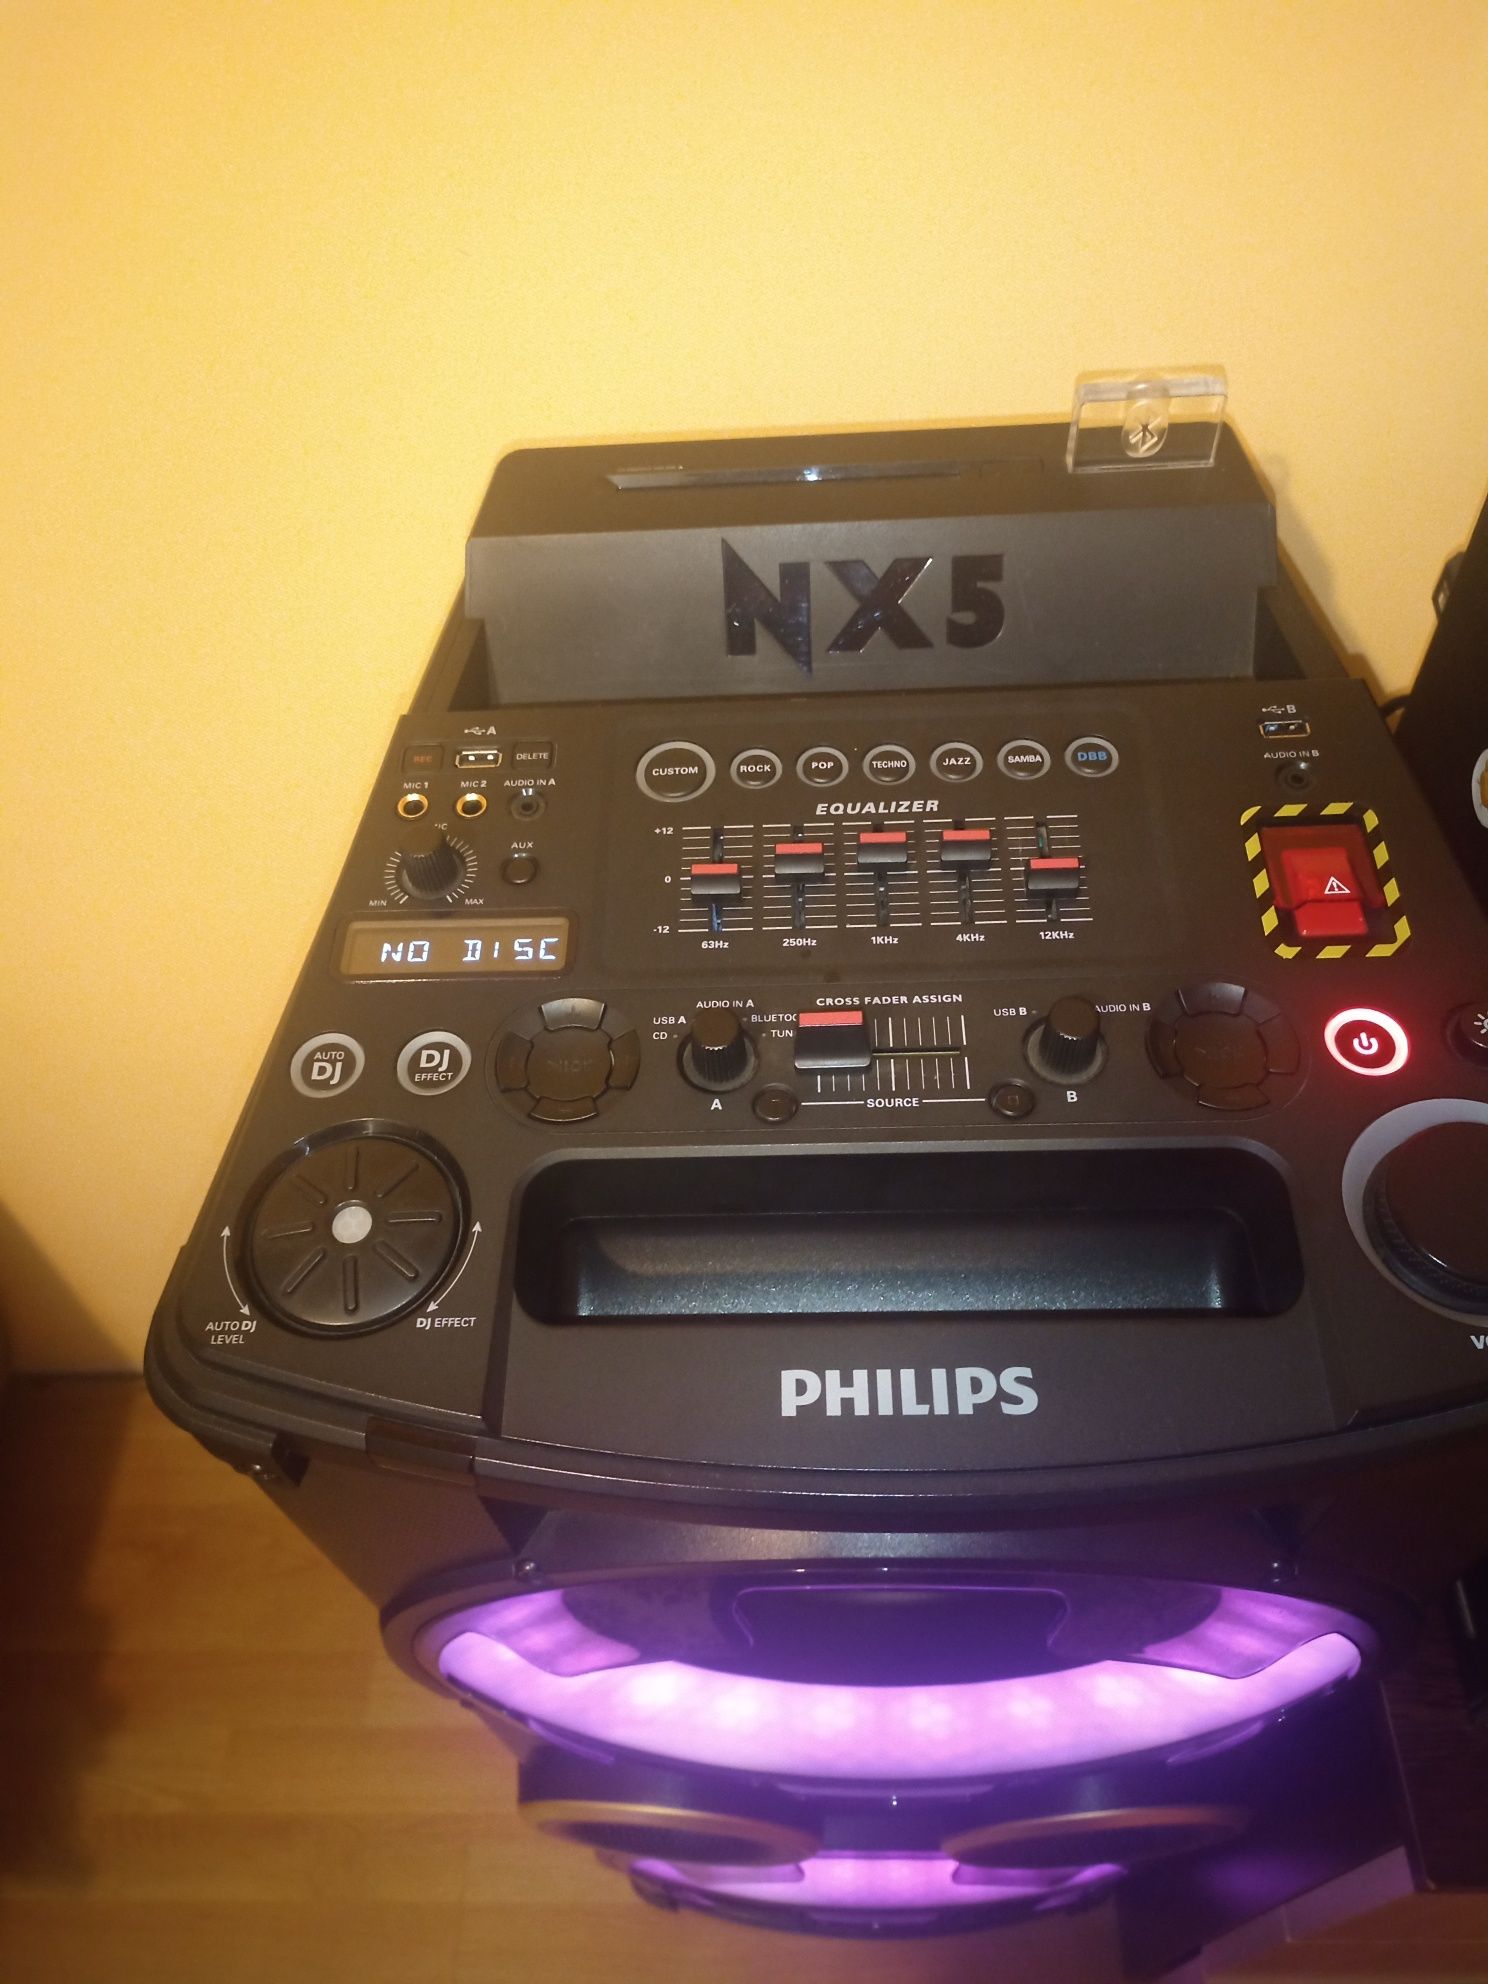 Philips NTRX500
Philips NTRX500